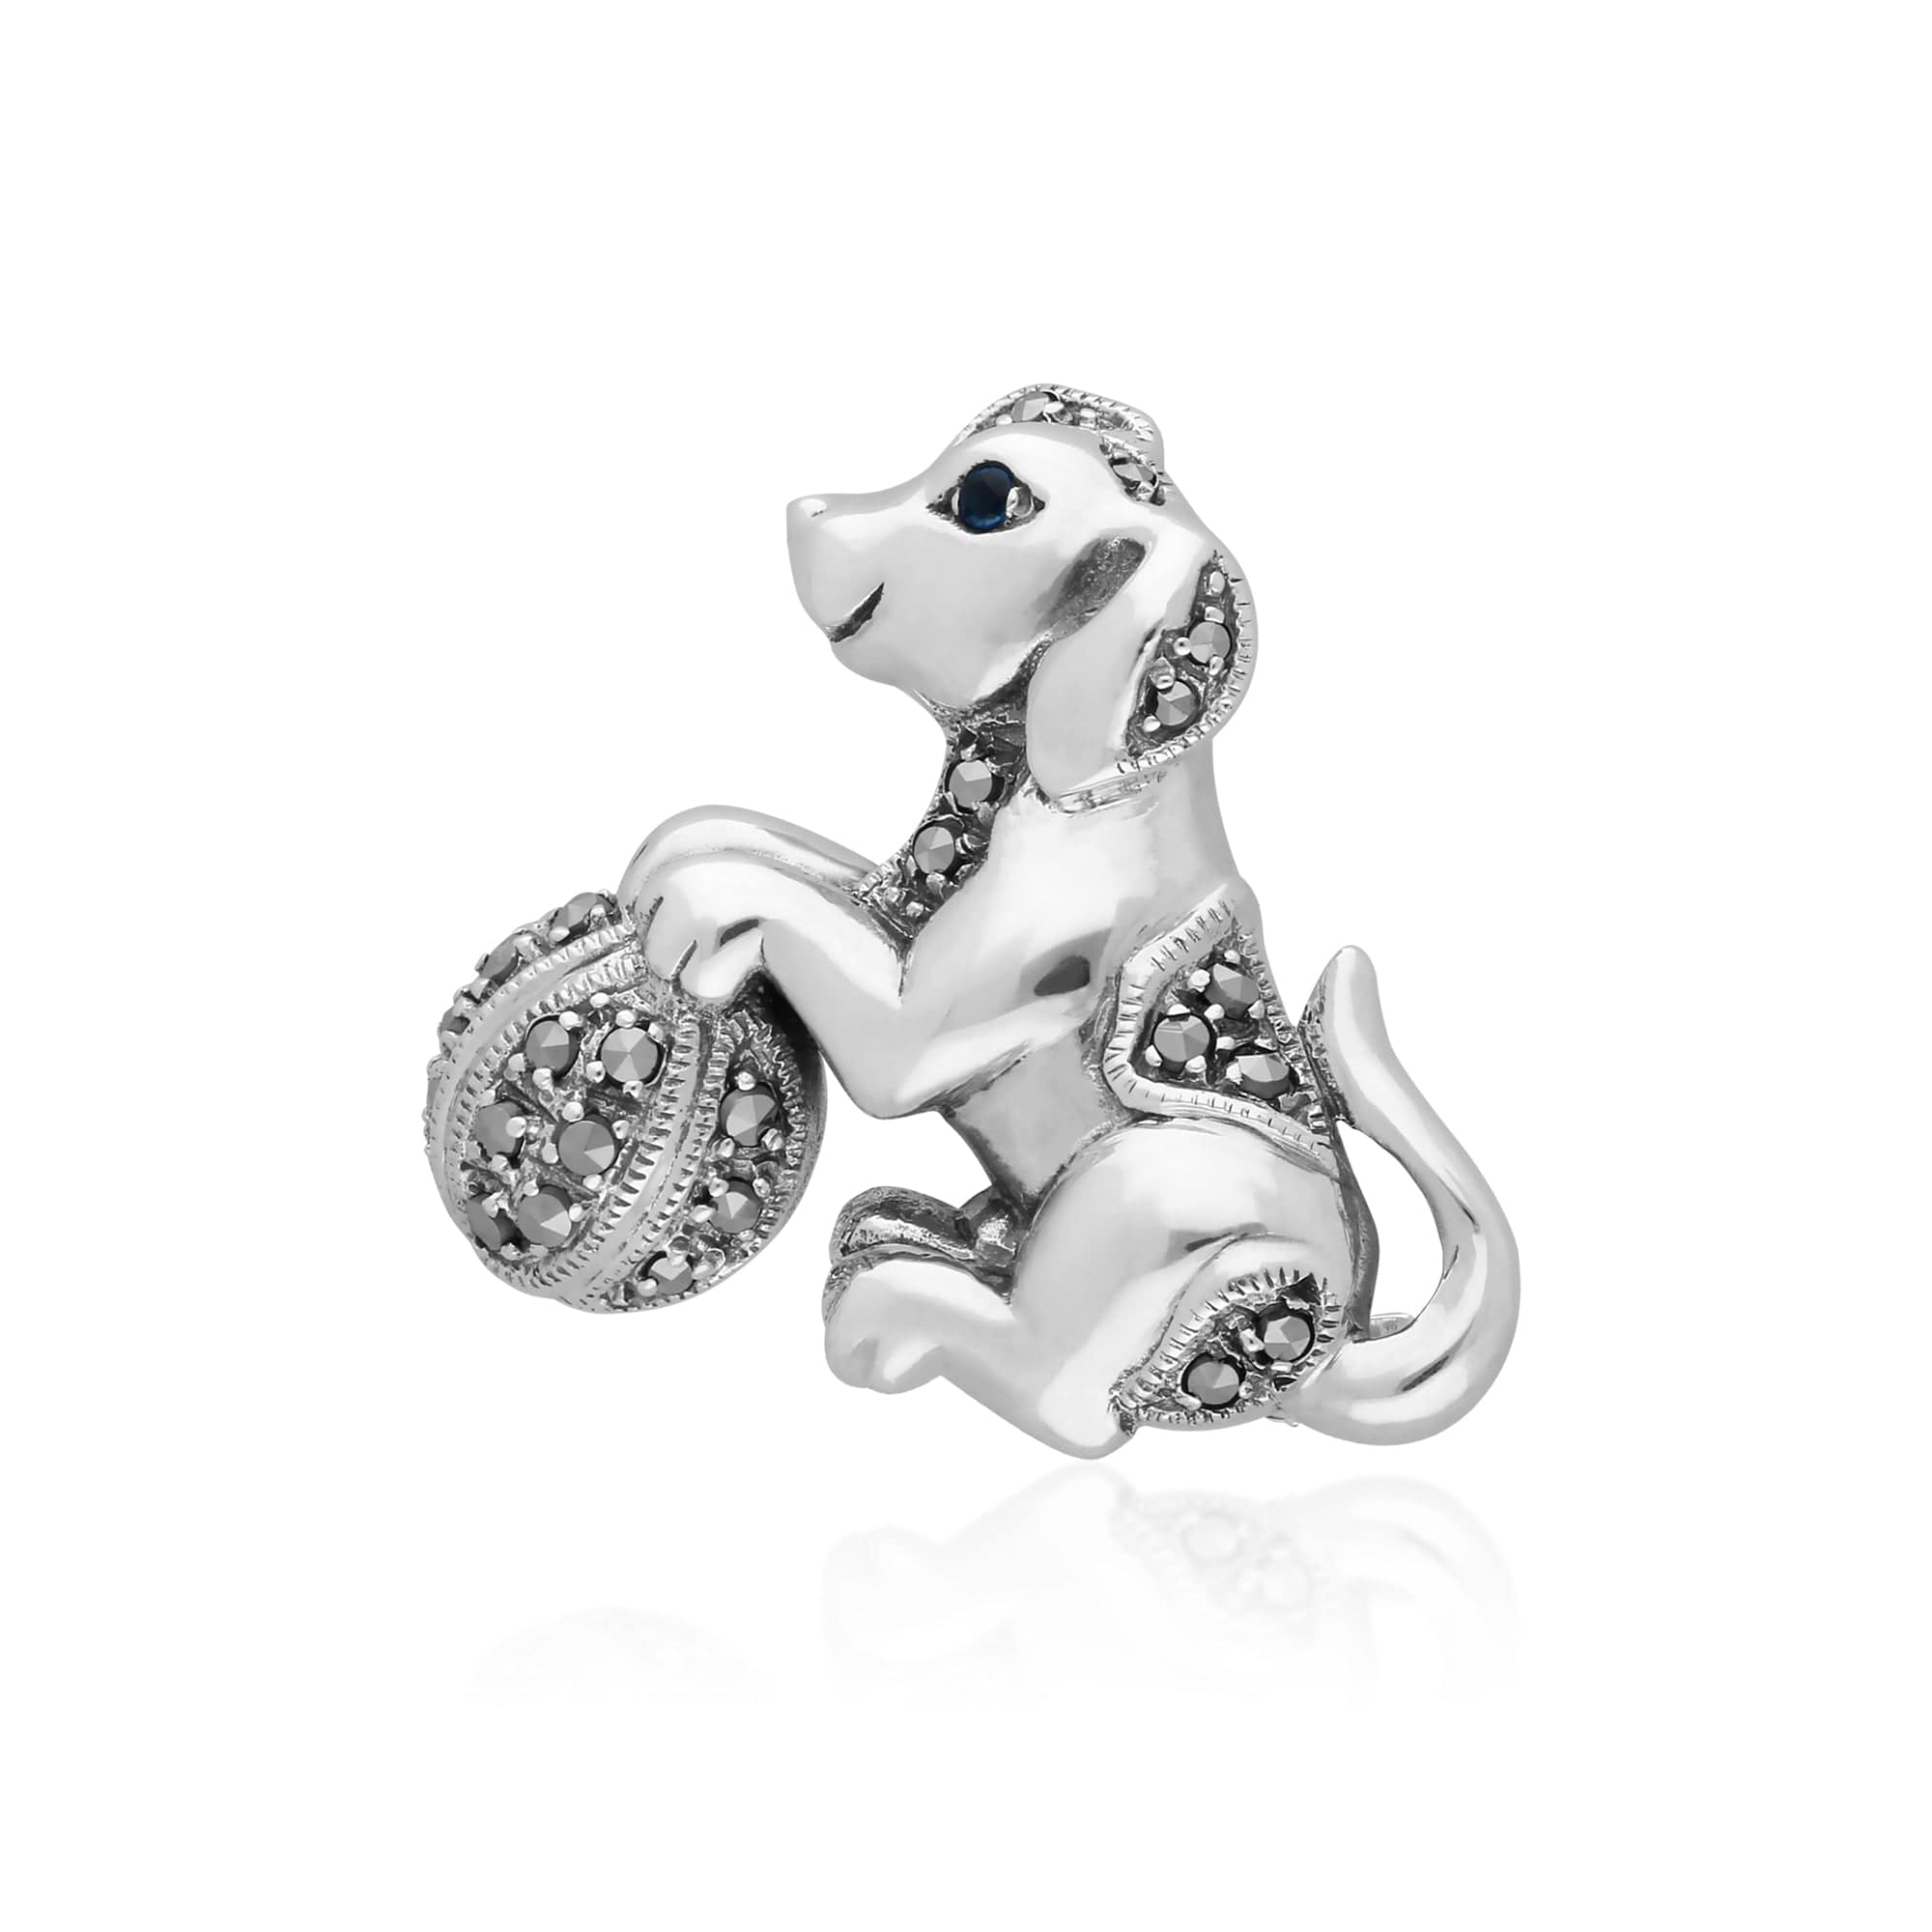 Art Nouveau Round Marcasite & Sapphire Playful Dog Brooch in 925 Sterling Silver - Gemondo